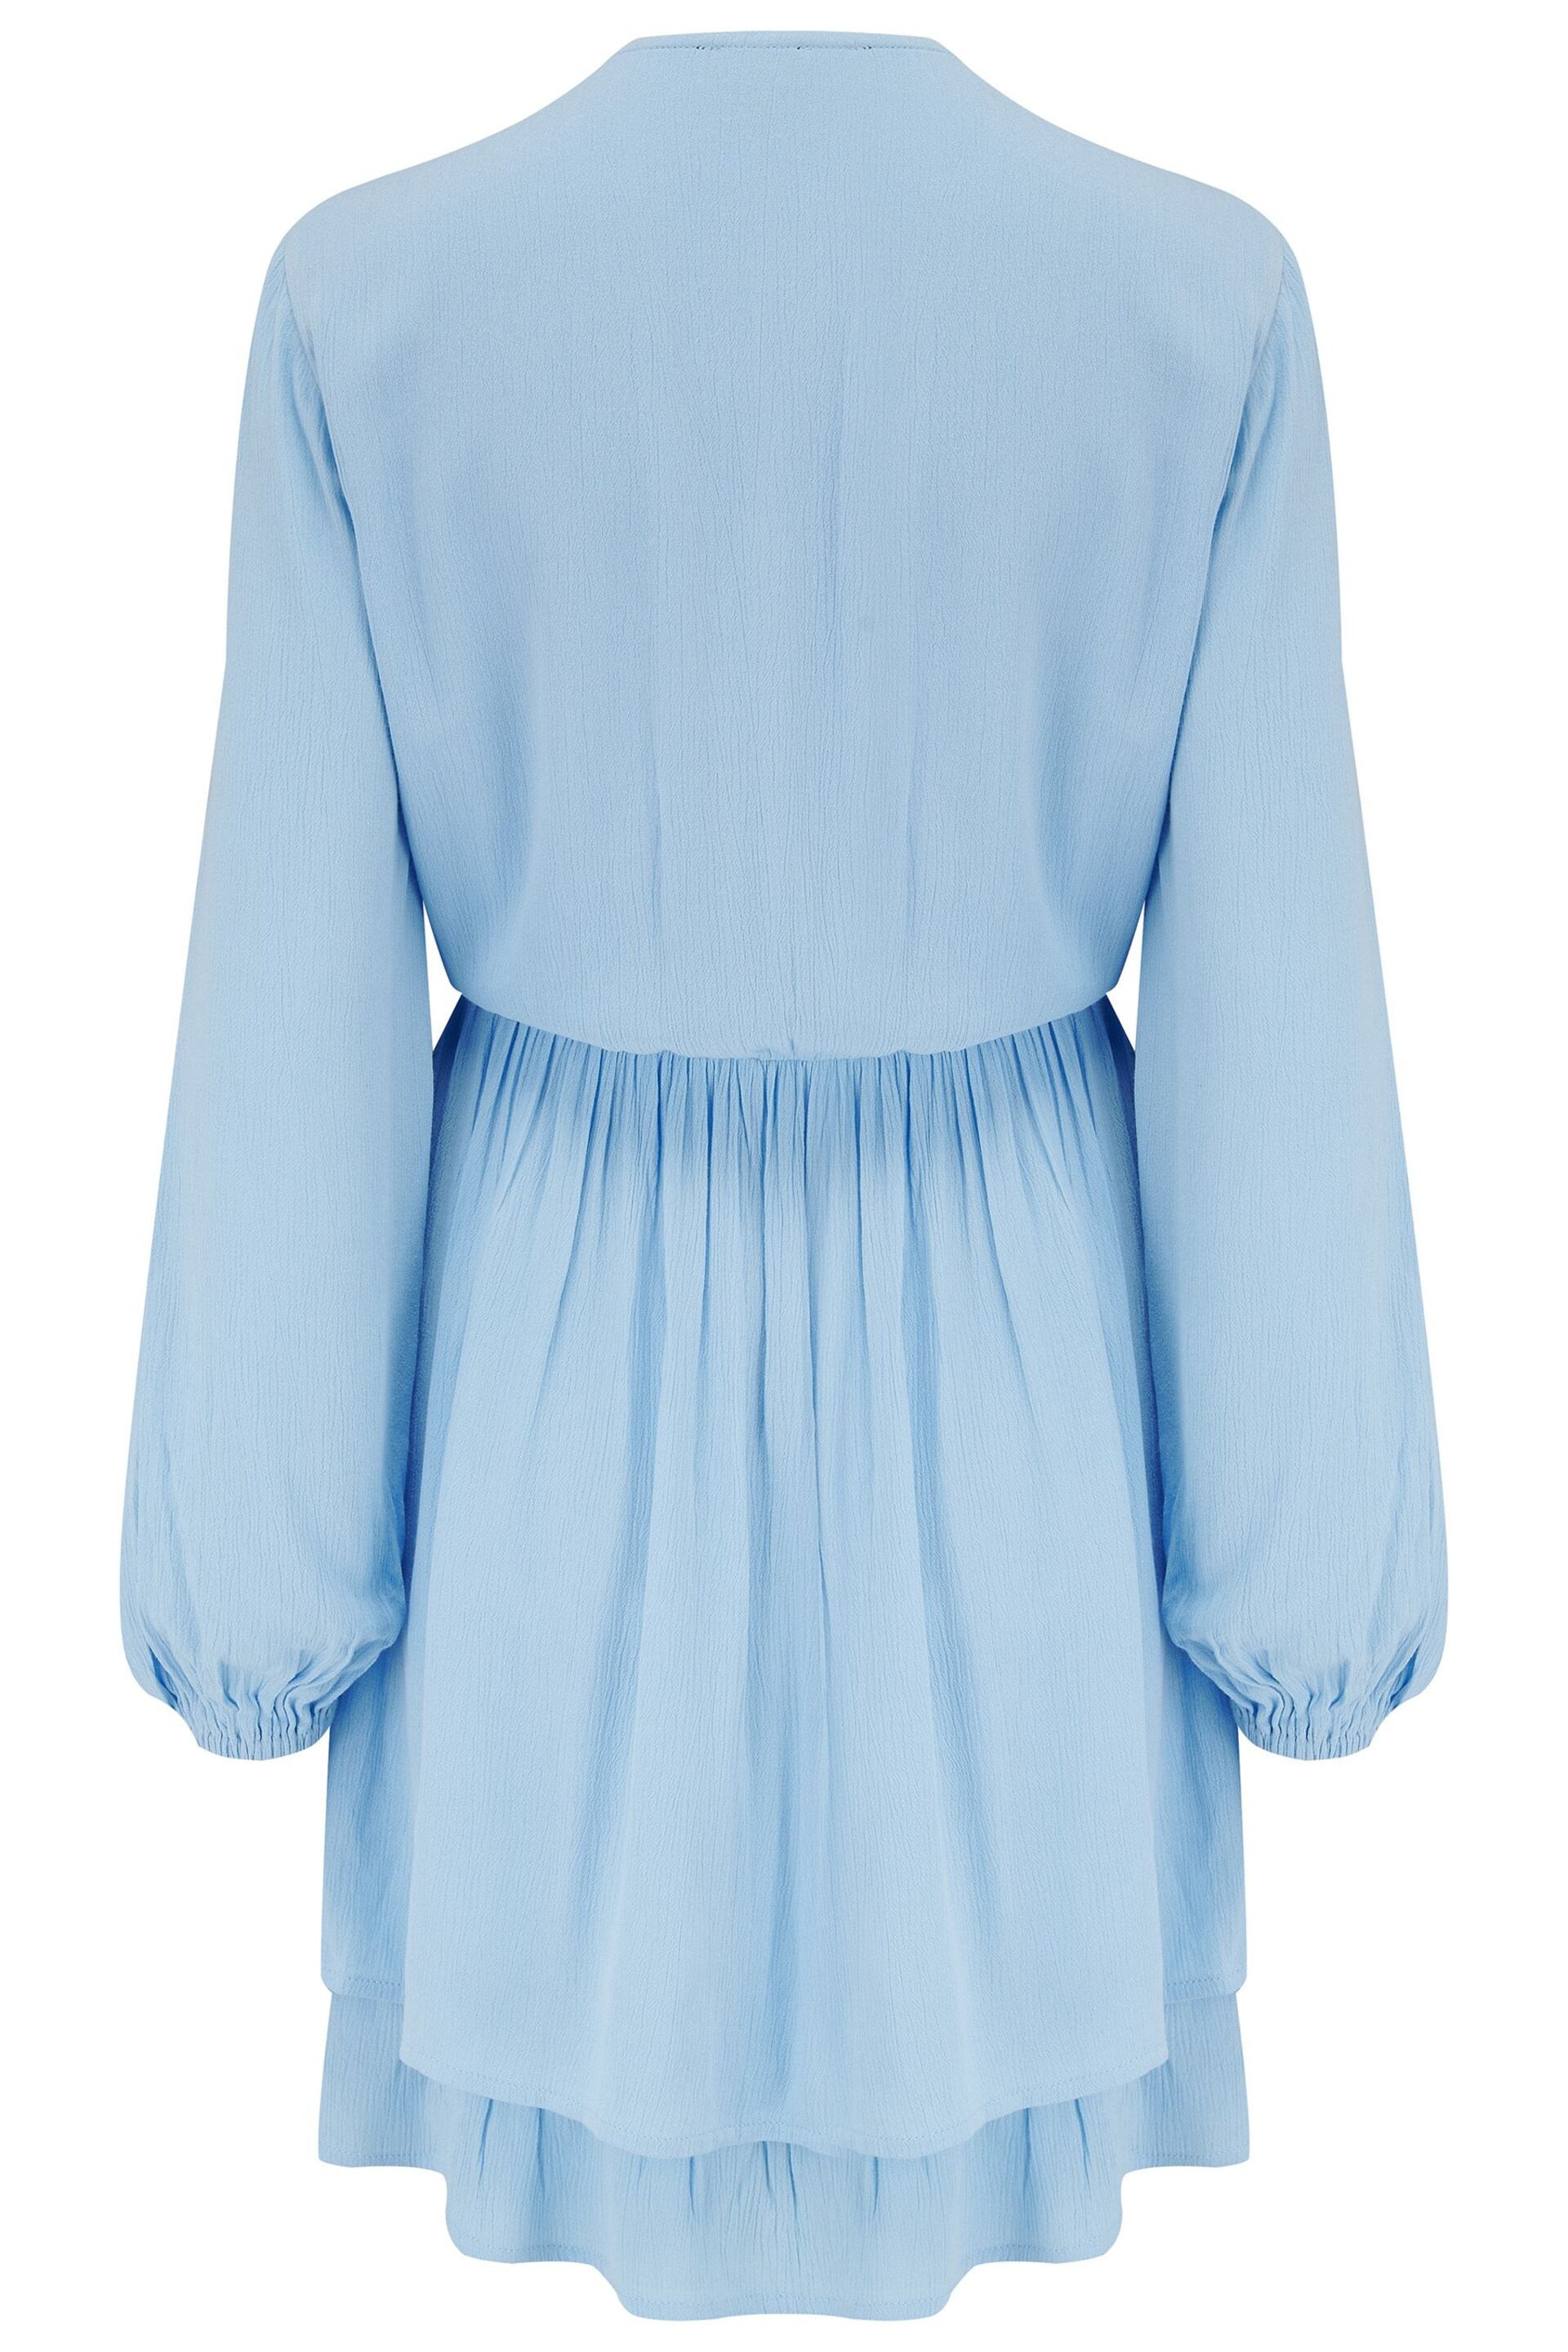 Pour Moi Blue Kate Woven Viscose Button Detail Long Sleeve Dress - Image 5 of 5